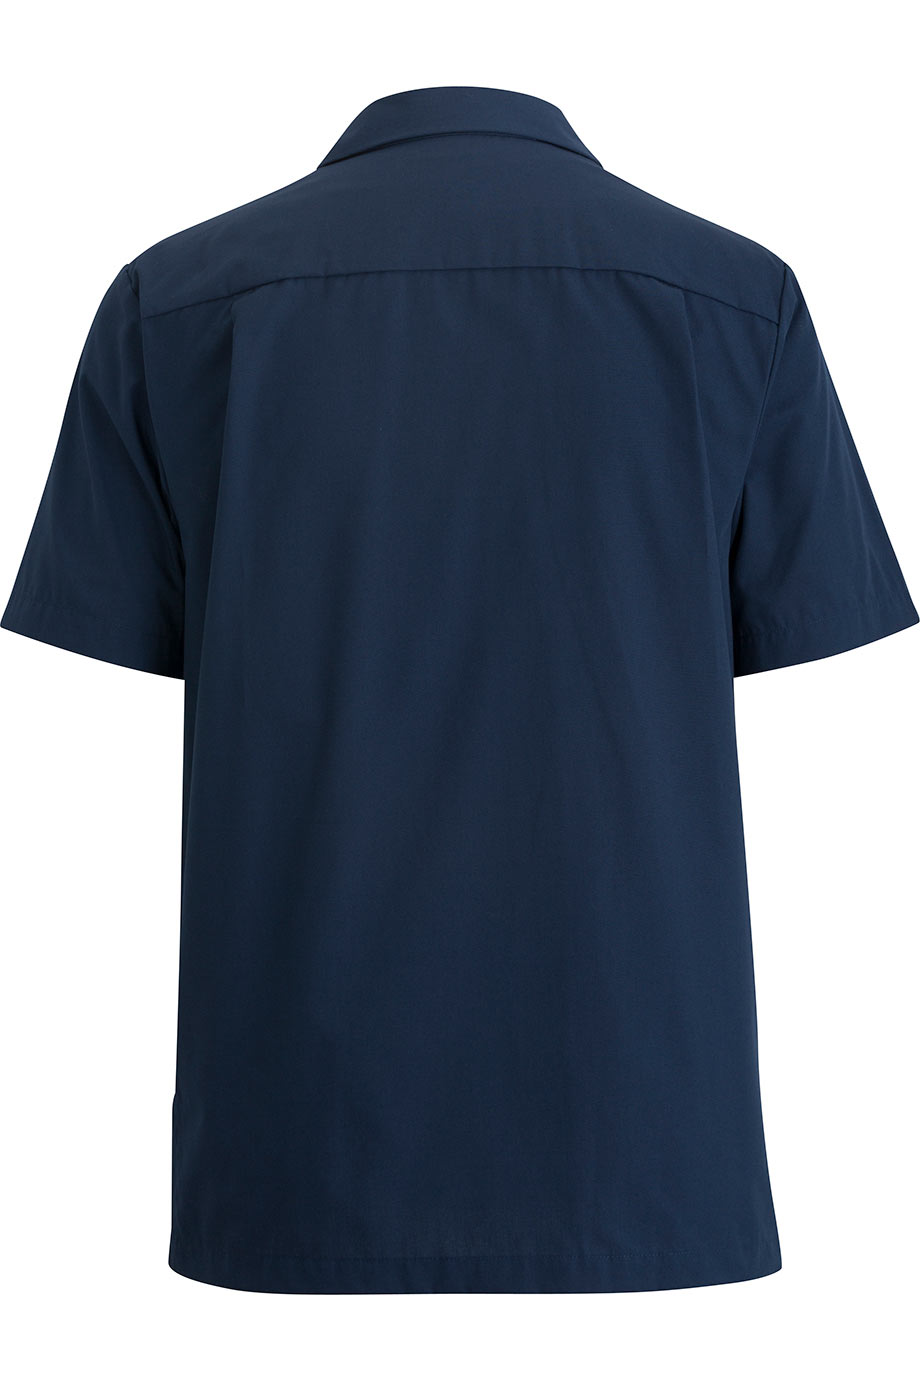 Essential Zip-Front Service Shirt